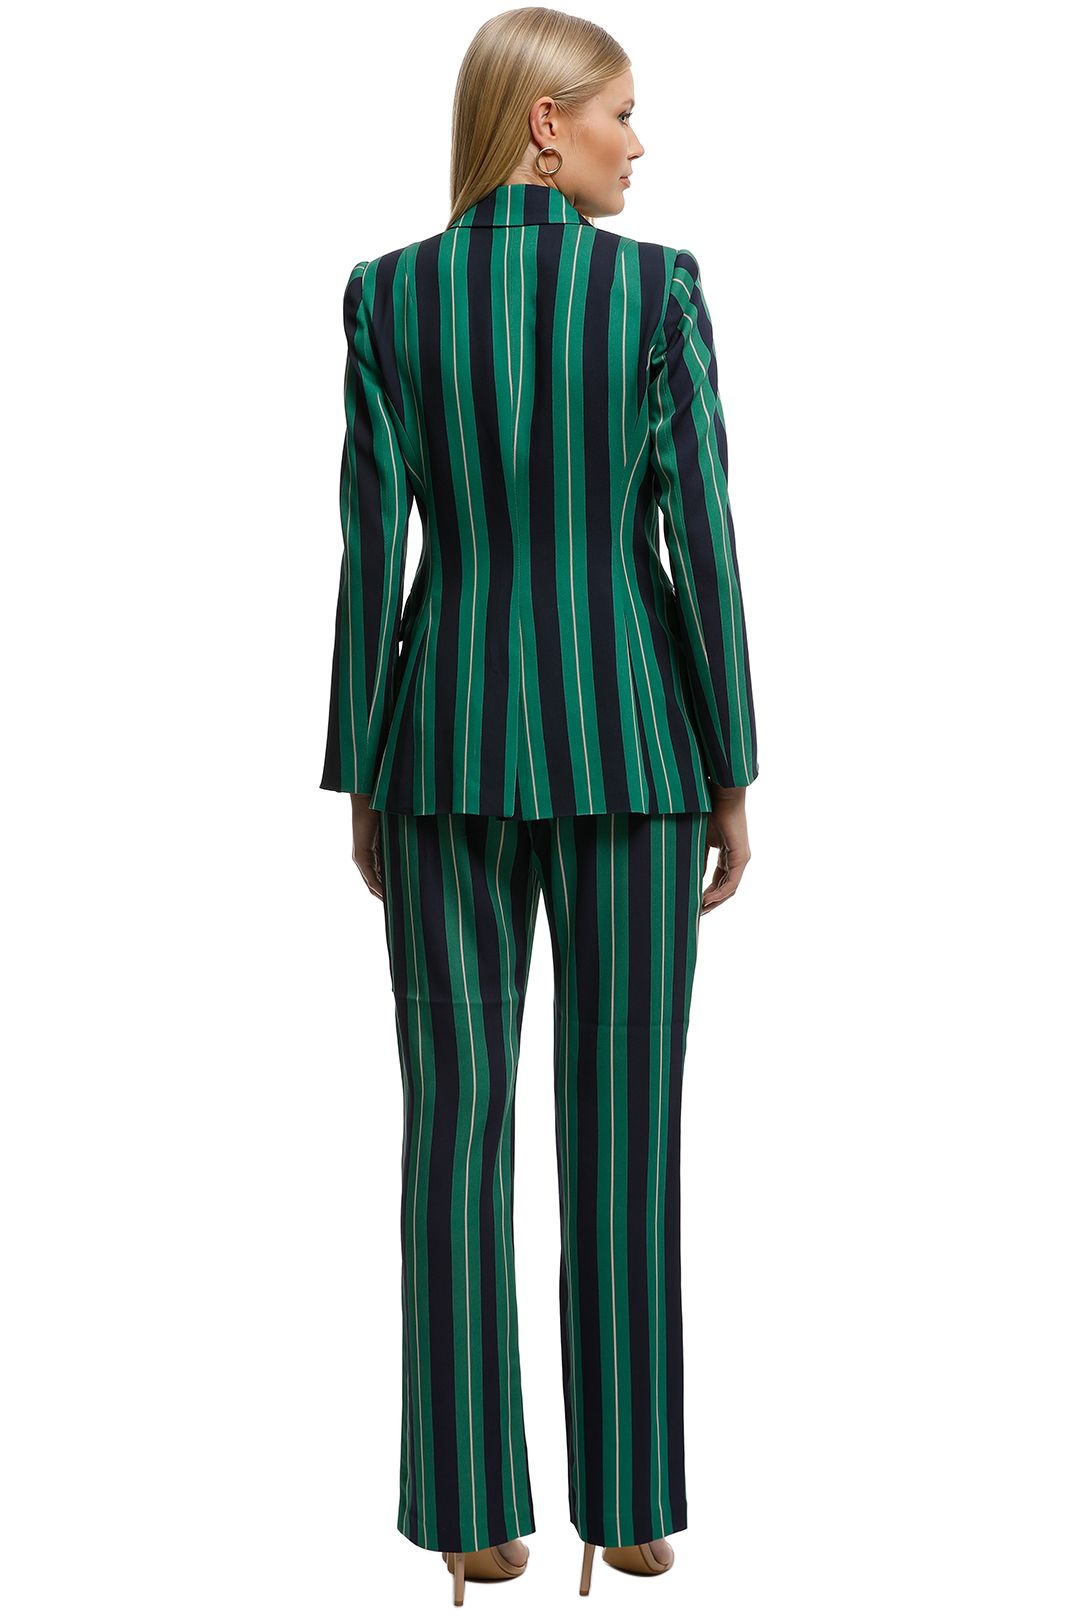 Moss-and-Spy-Gatsby-Blazer-and-Pant-Set-Green-Stripe-Back